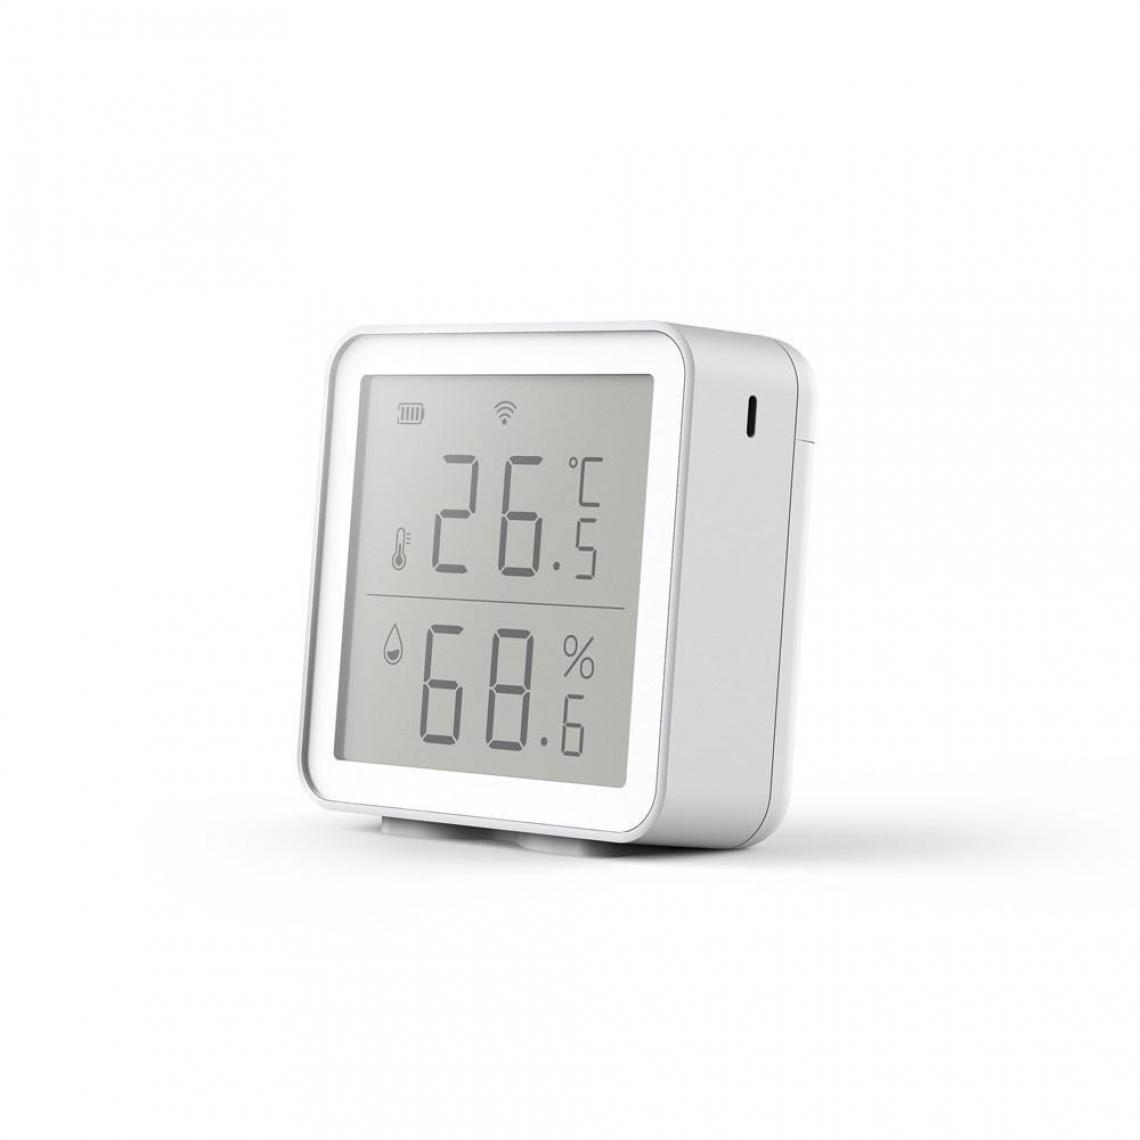 Justgreenbox - WIFI Intelligent Home Wireless Temperature Sensor Automation Scene System - T6112211955889 - Thermostat